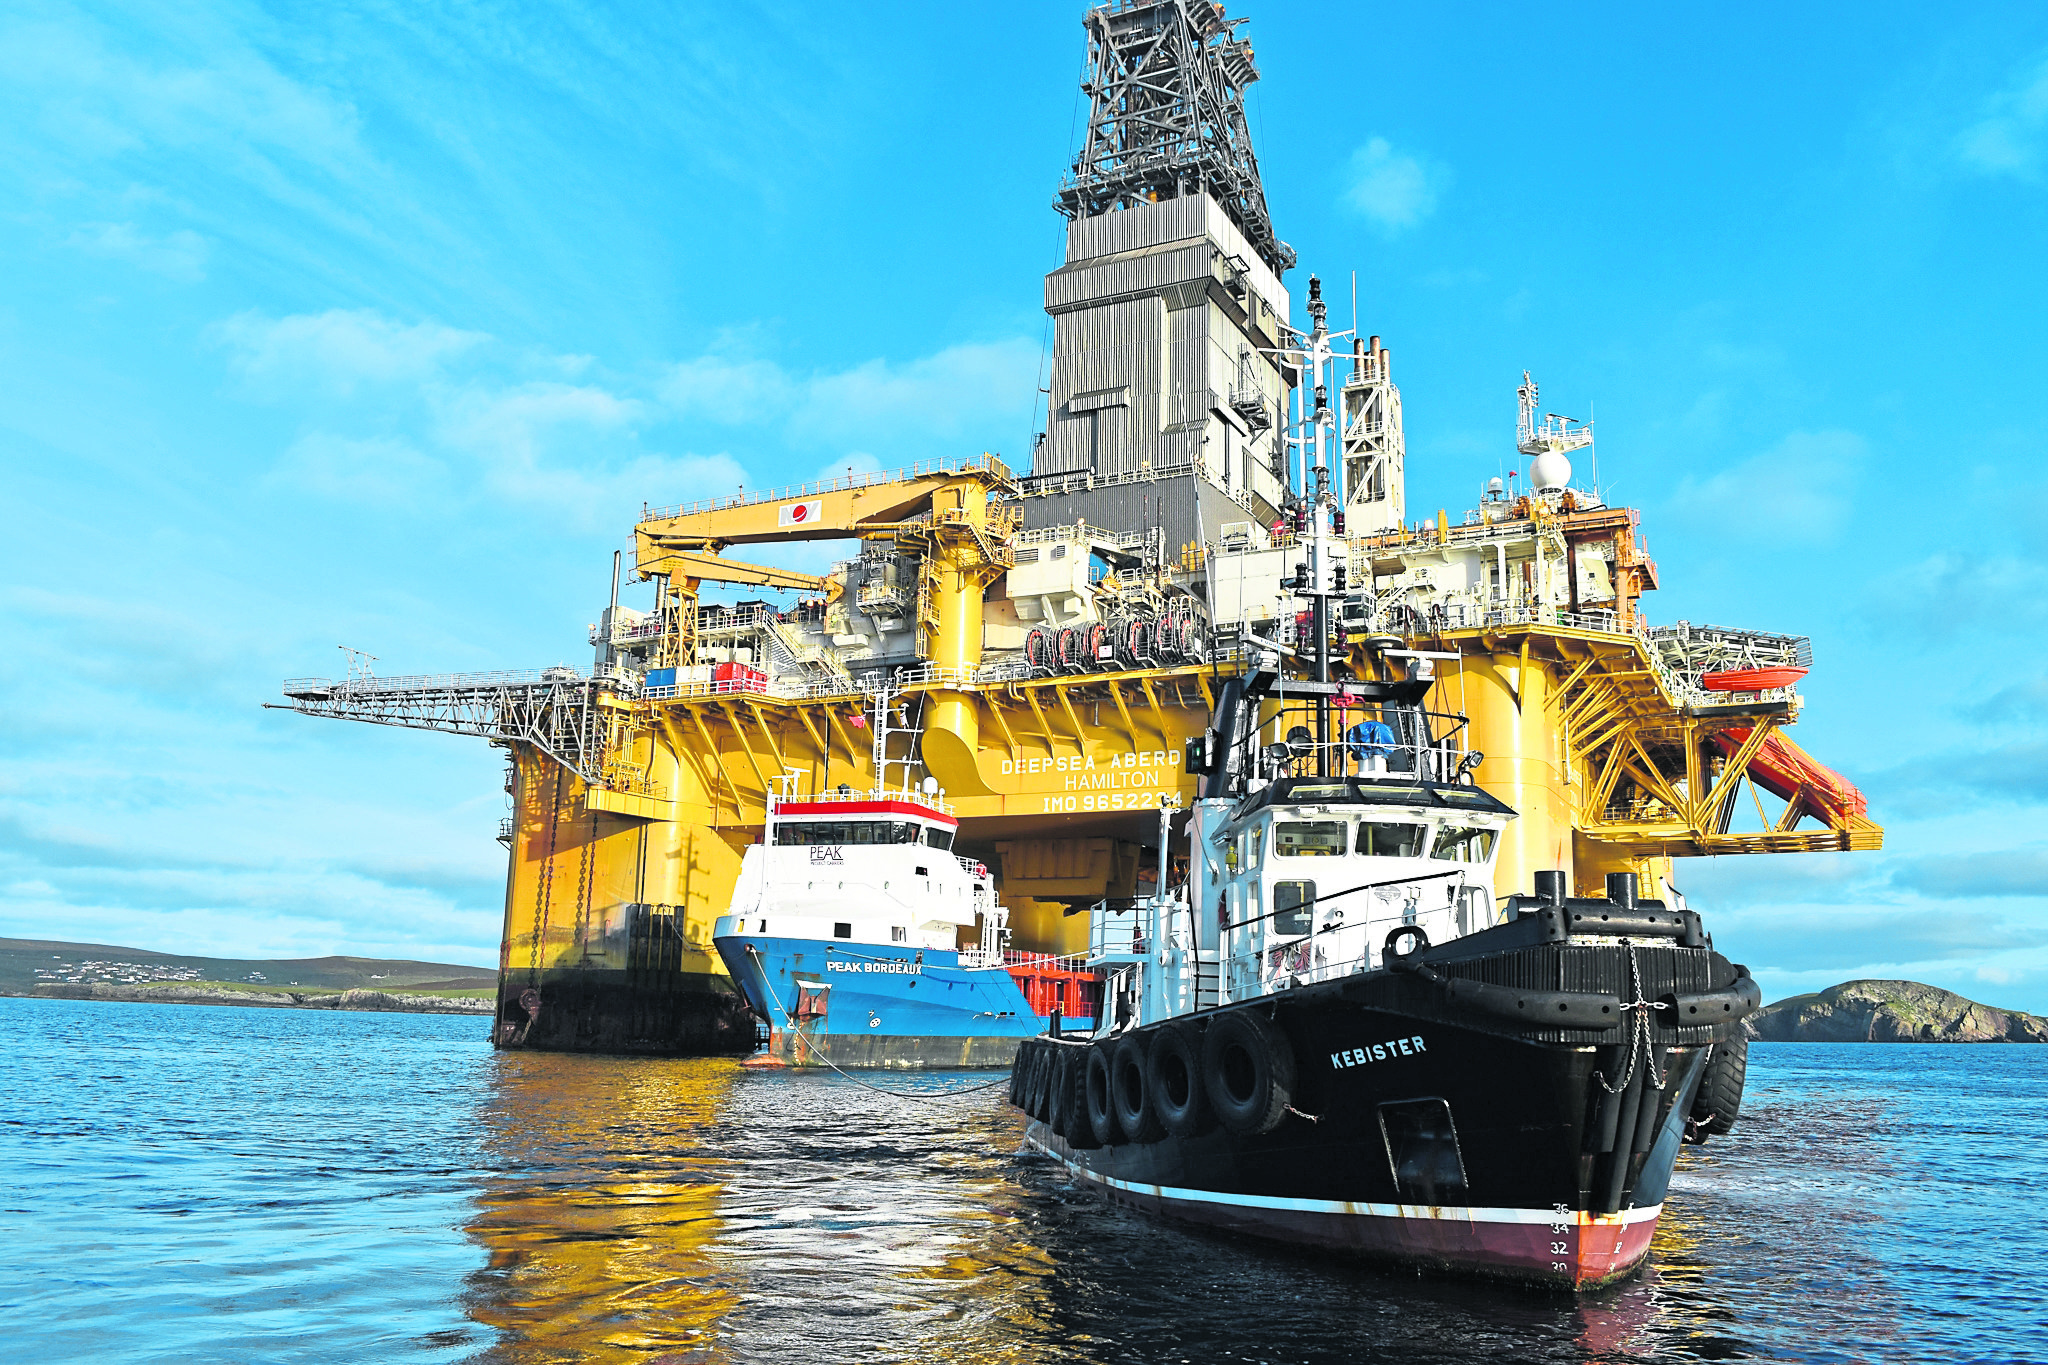 The Deepsea Aberdeen drilling rig in Lerwick Harbour.